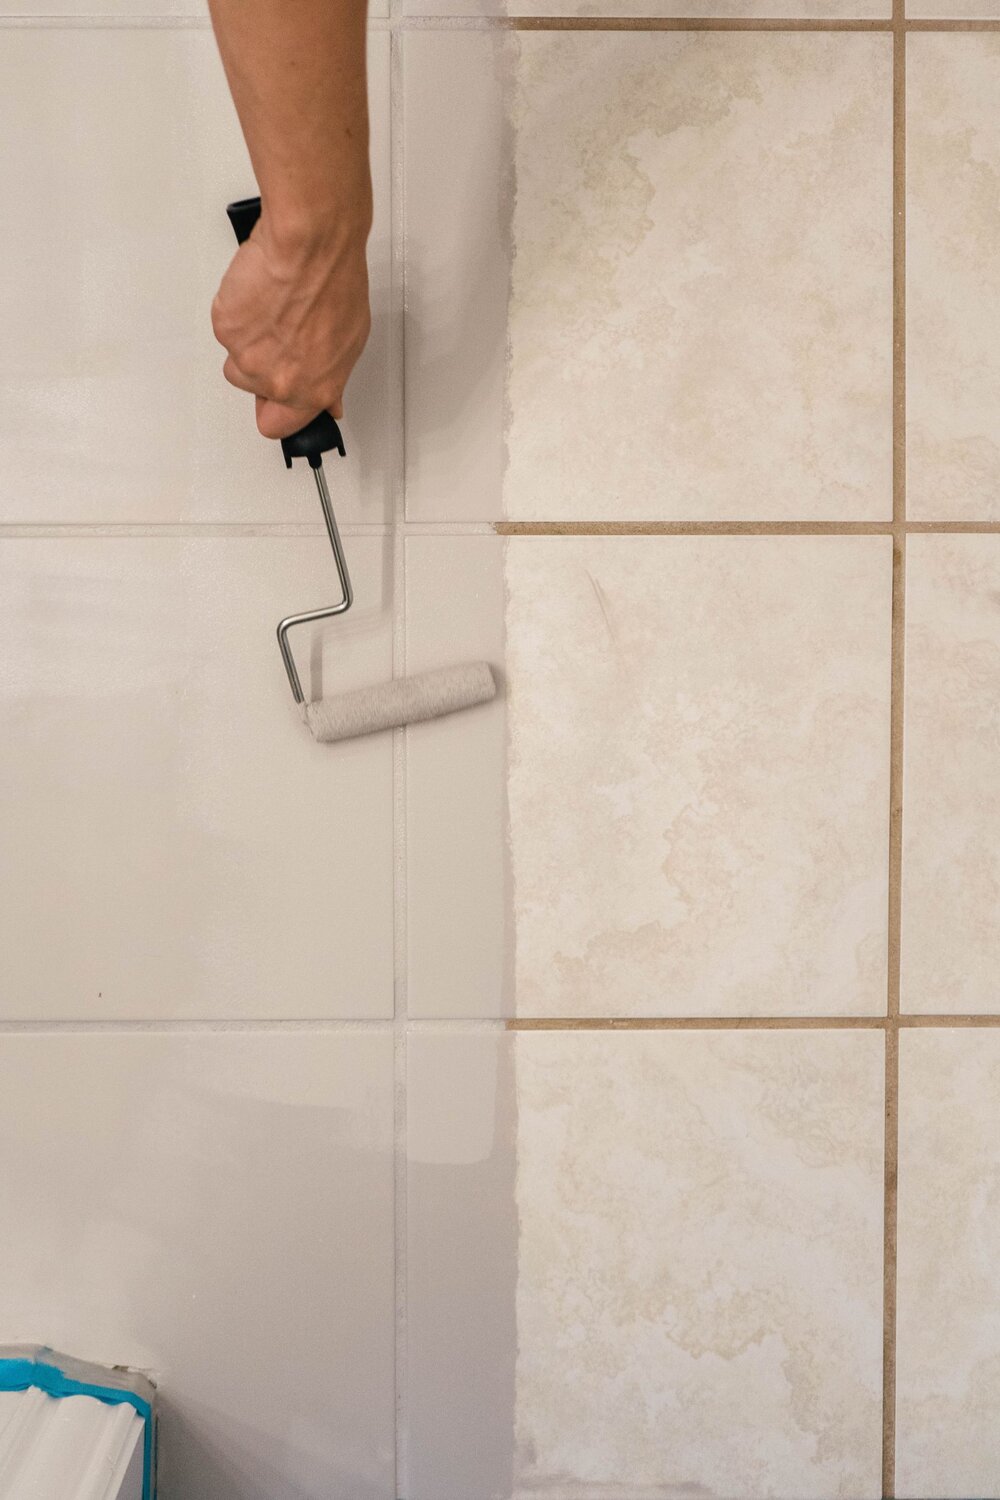 Diy How To Paint Ceramic Floor Tile, Can You Paint Floor Tiles